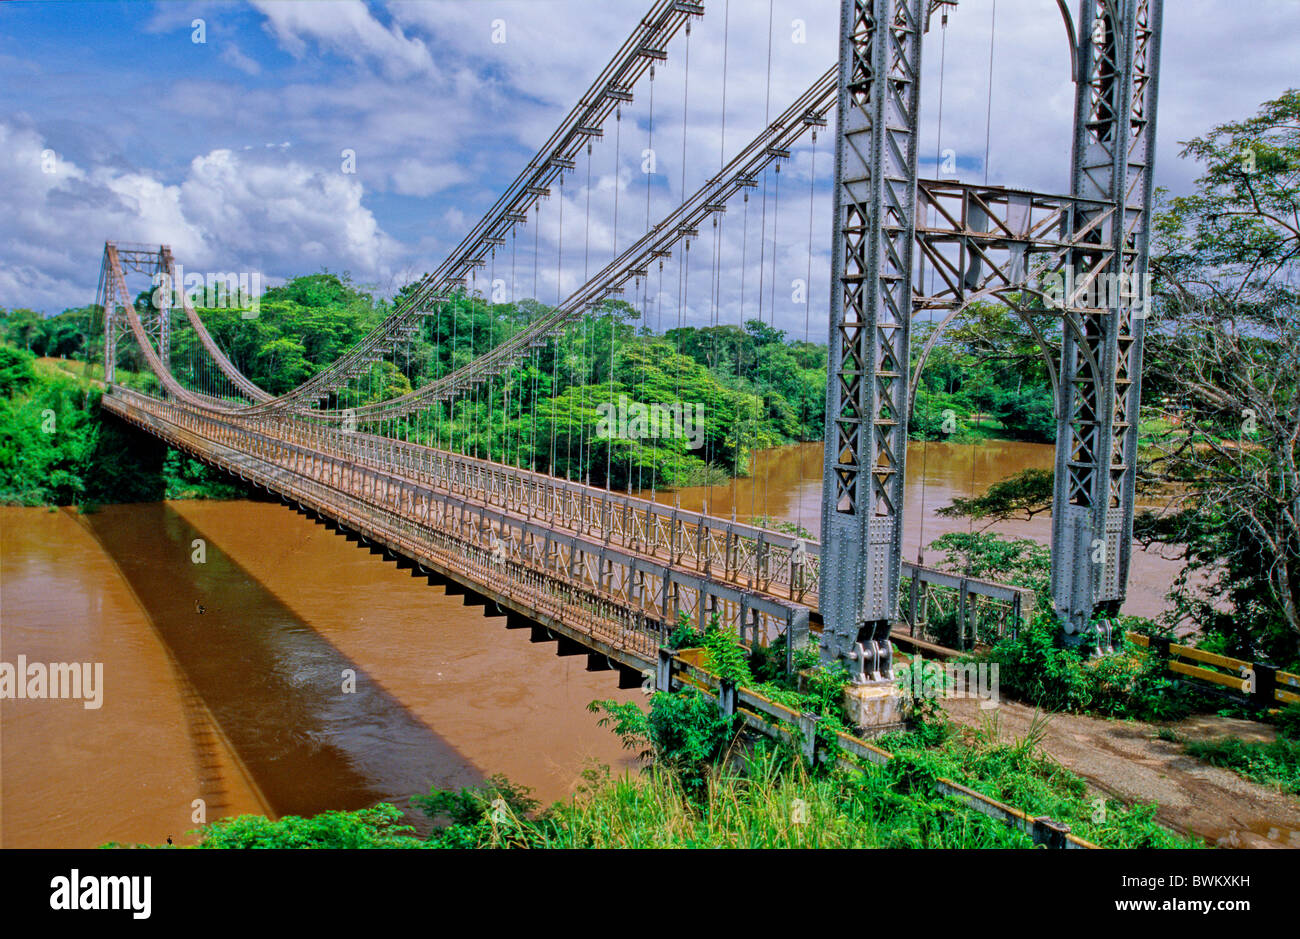 Venezuela South America Gustave Eiffel Bridge La Gran Sabana South America Iron Construction Stock Photo